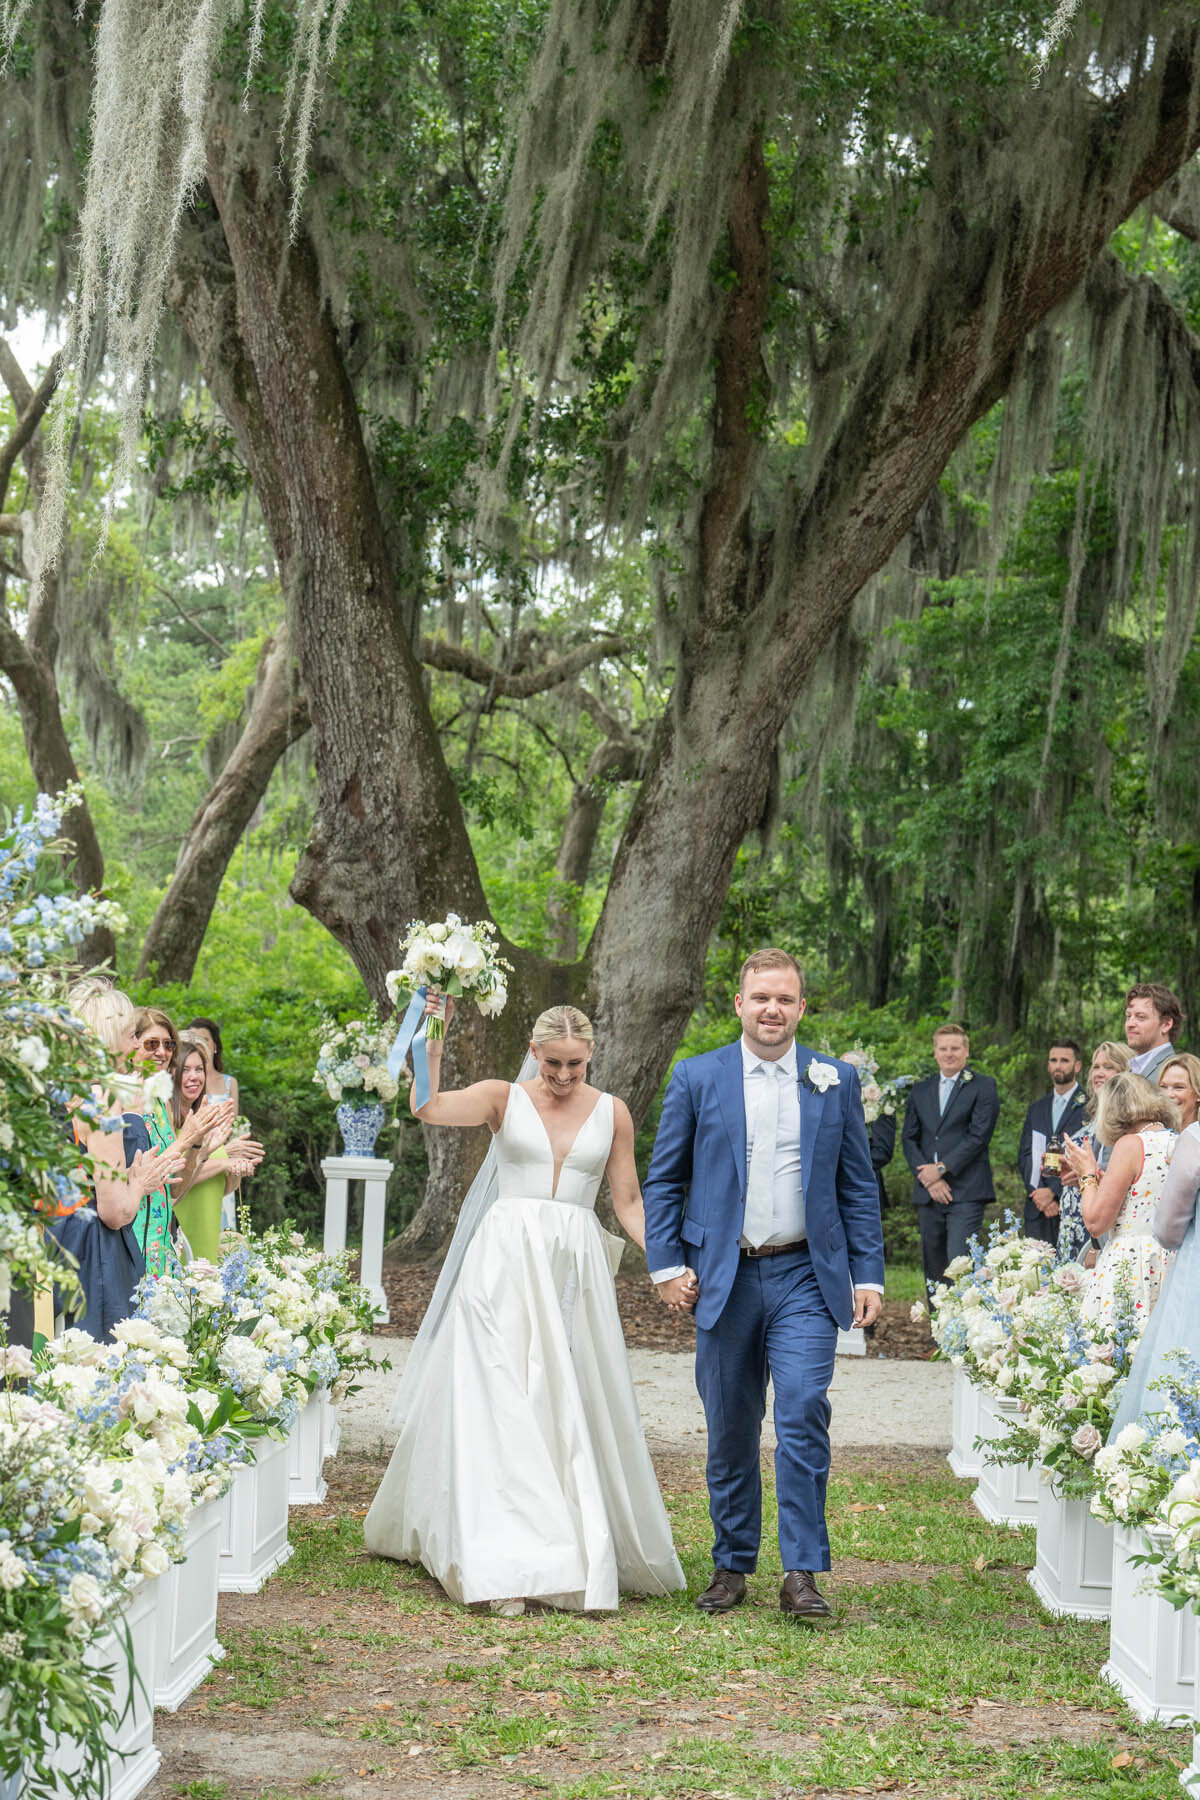 Savannah-Georgia-wedding-planner-destinctive-events-kelli boyd photography0071